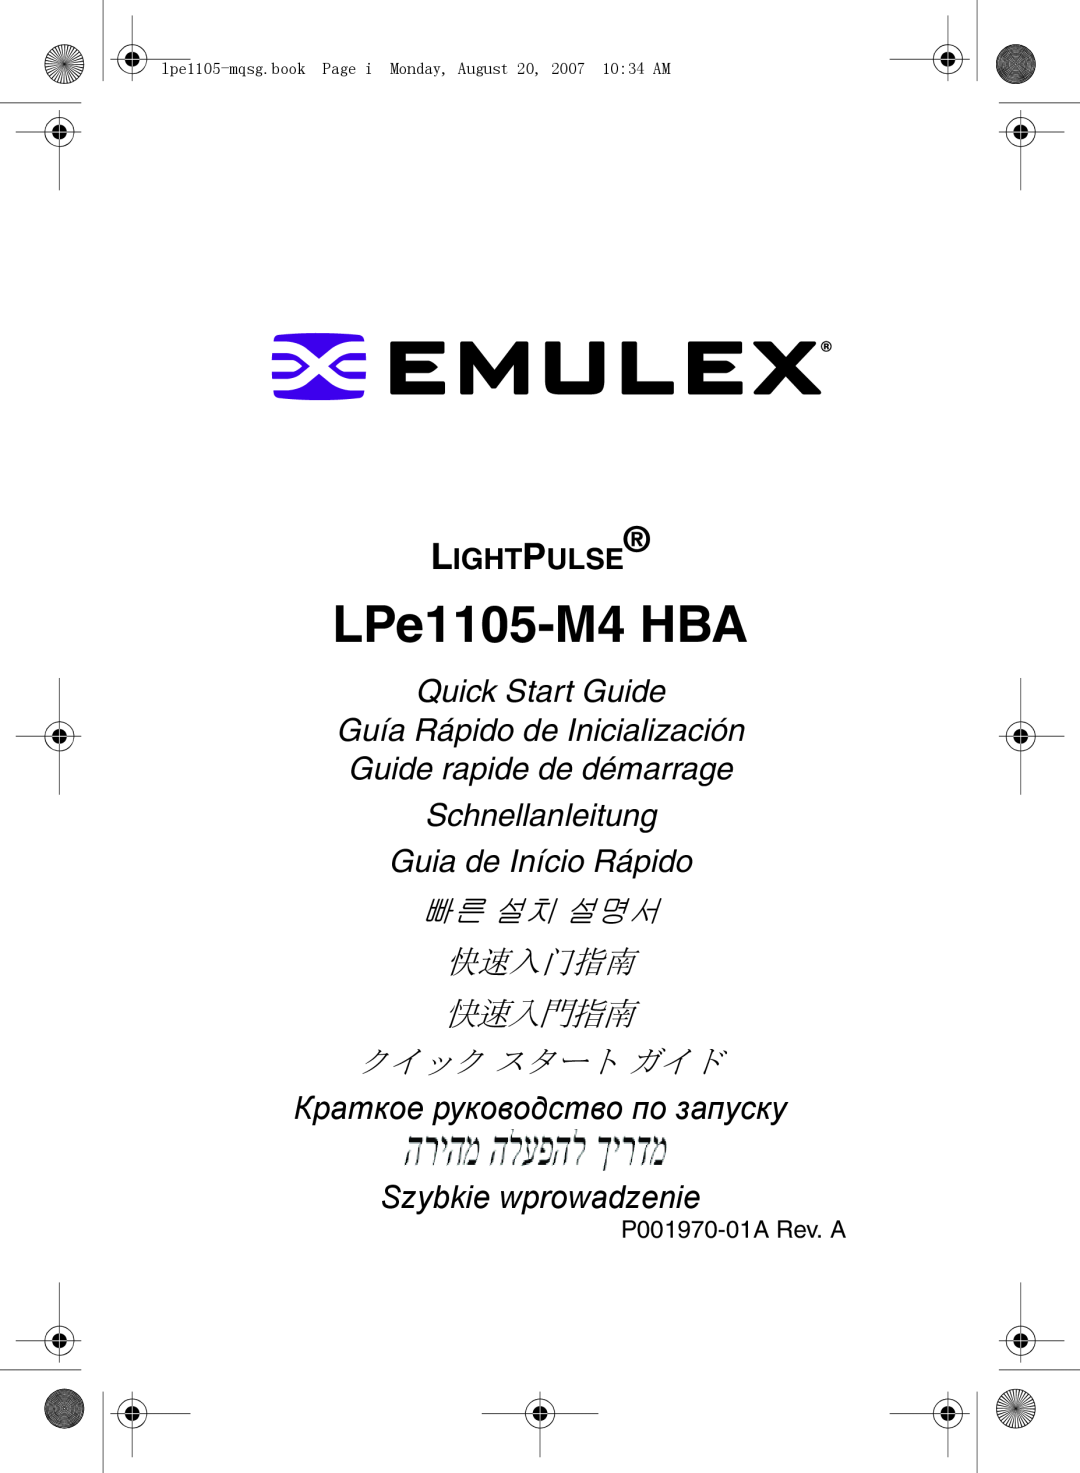 Emulex LPe1105-M4 HBA quick start Quick Start Guide, Guía Rápido de Inicialización Guide rapide de démarrage, 빠른 설치 설명서 